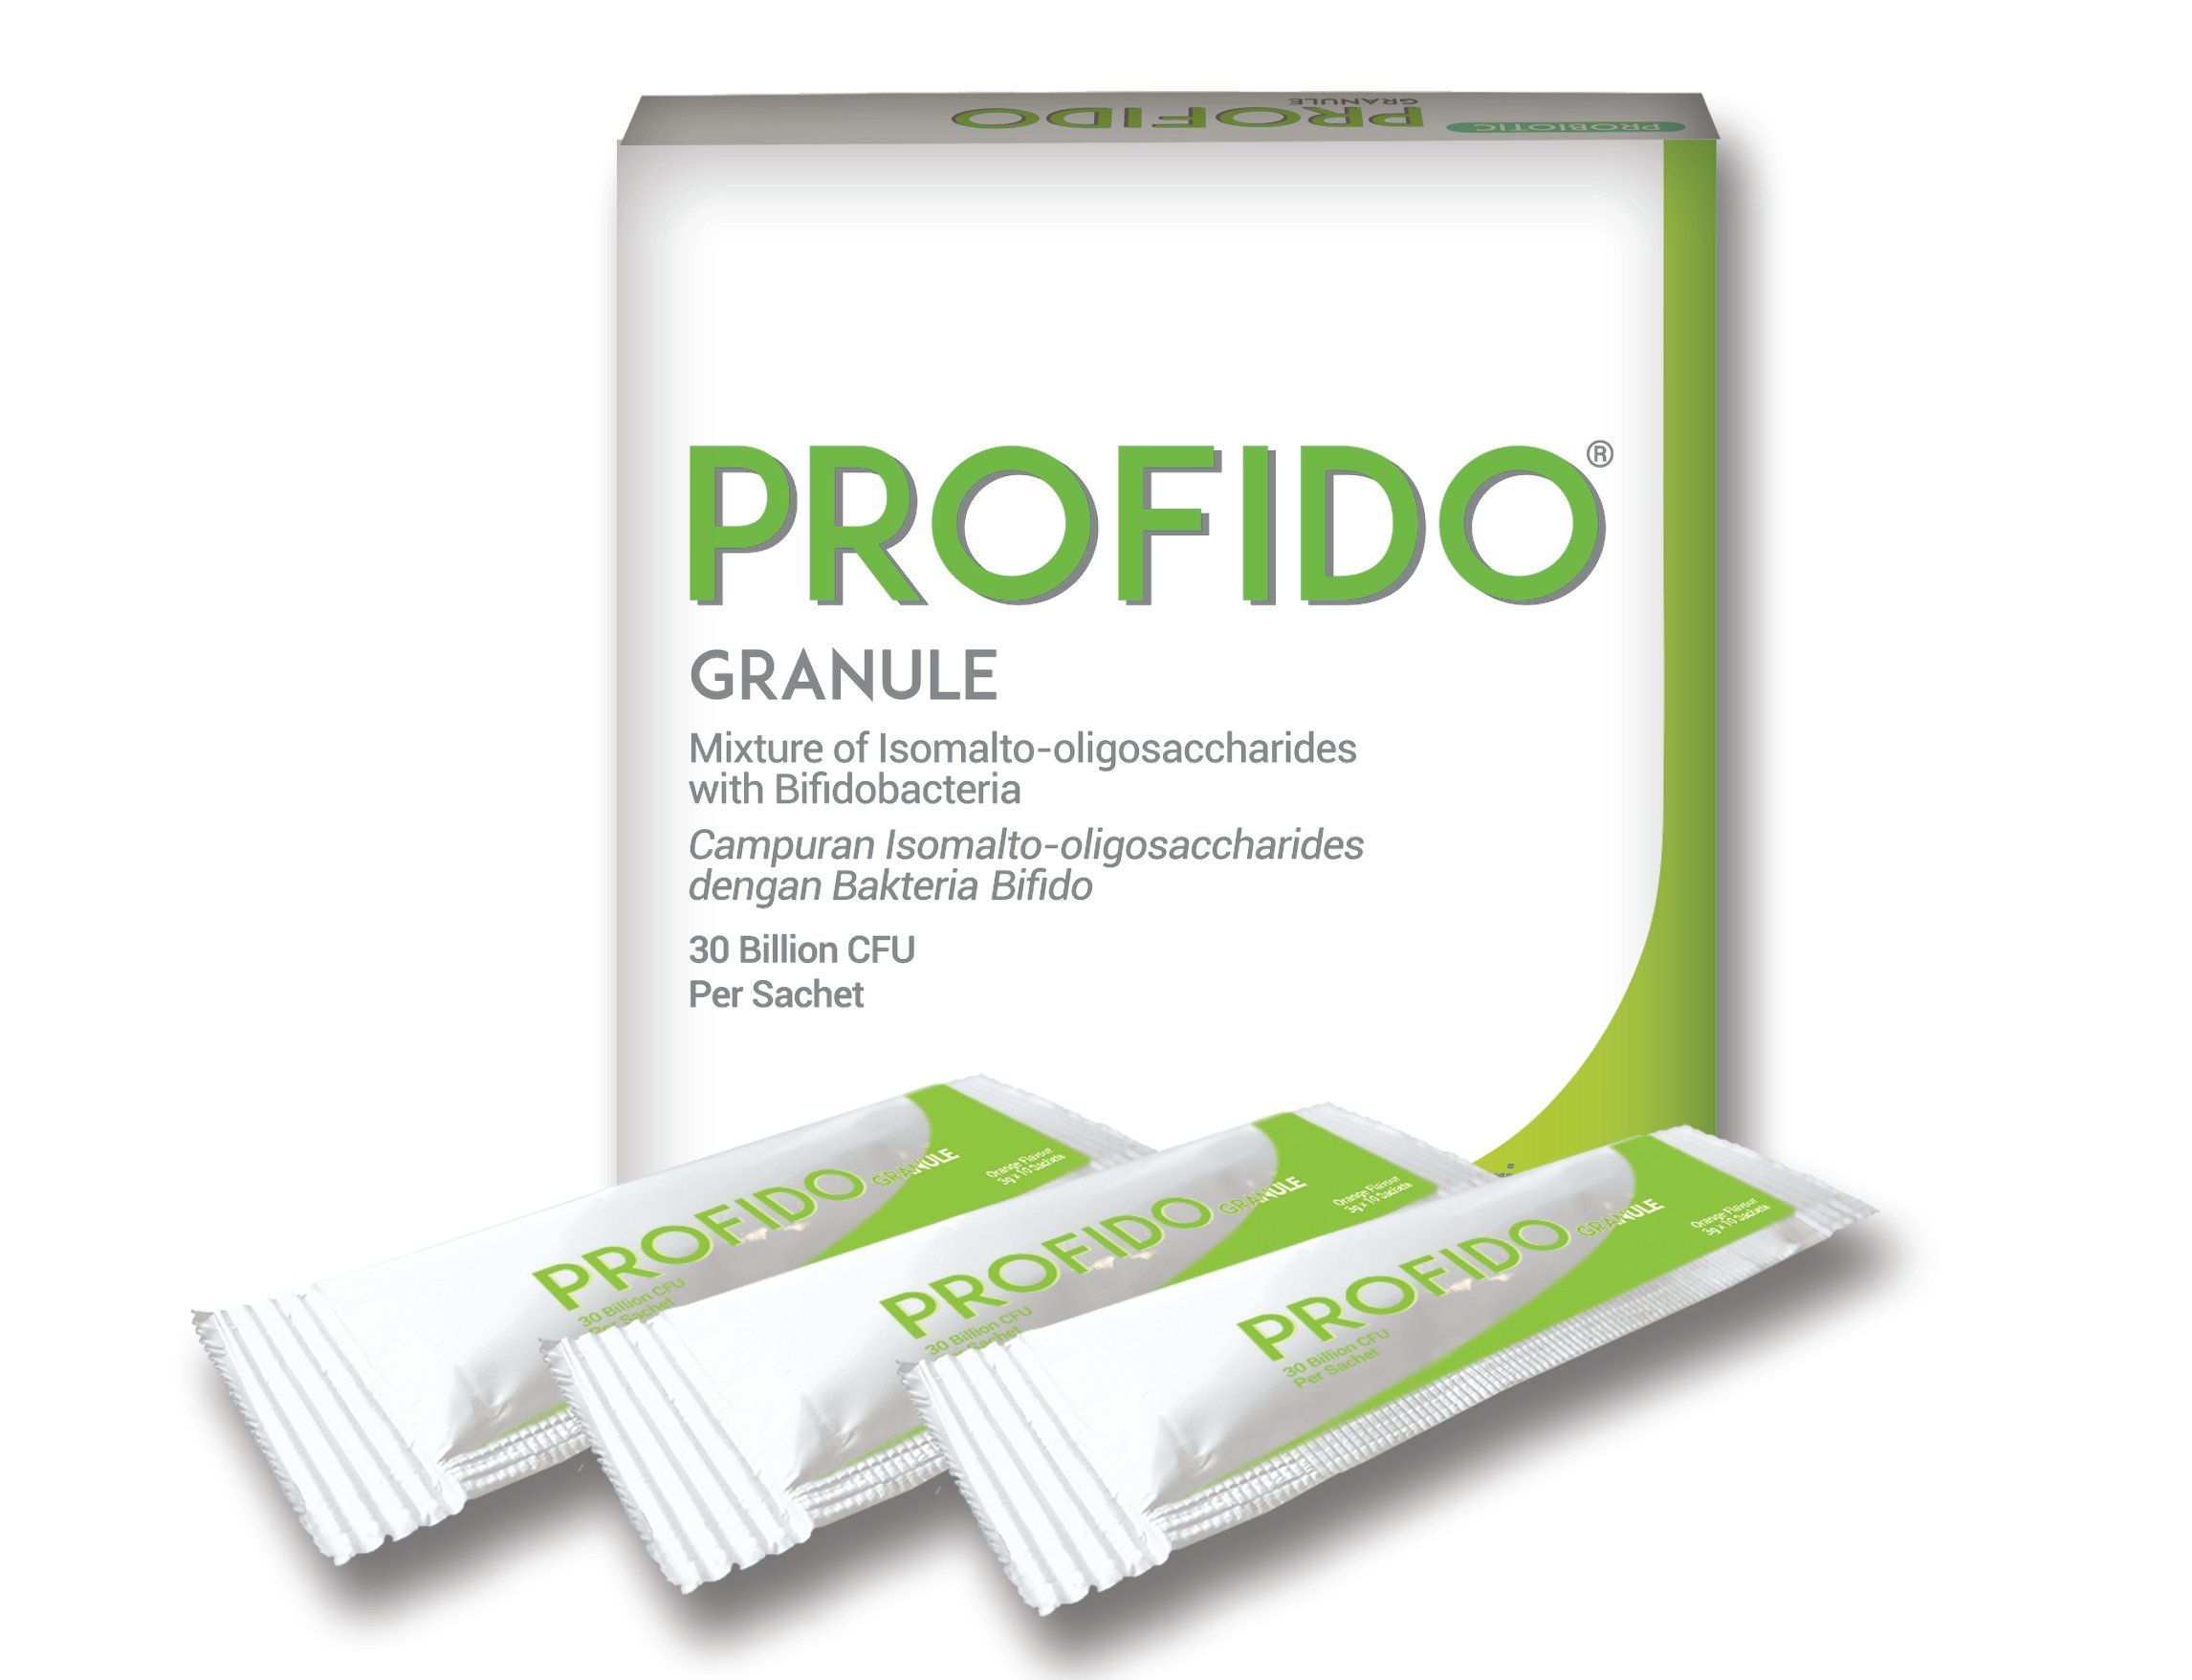 Profido Granule Probiotics